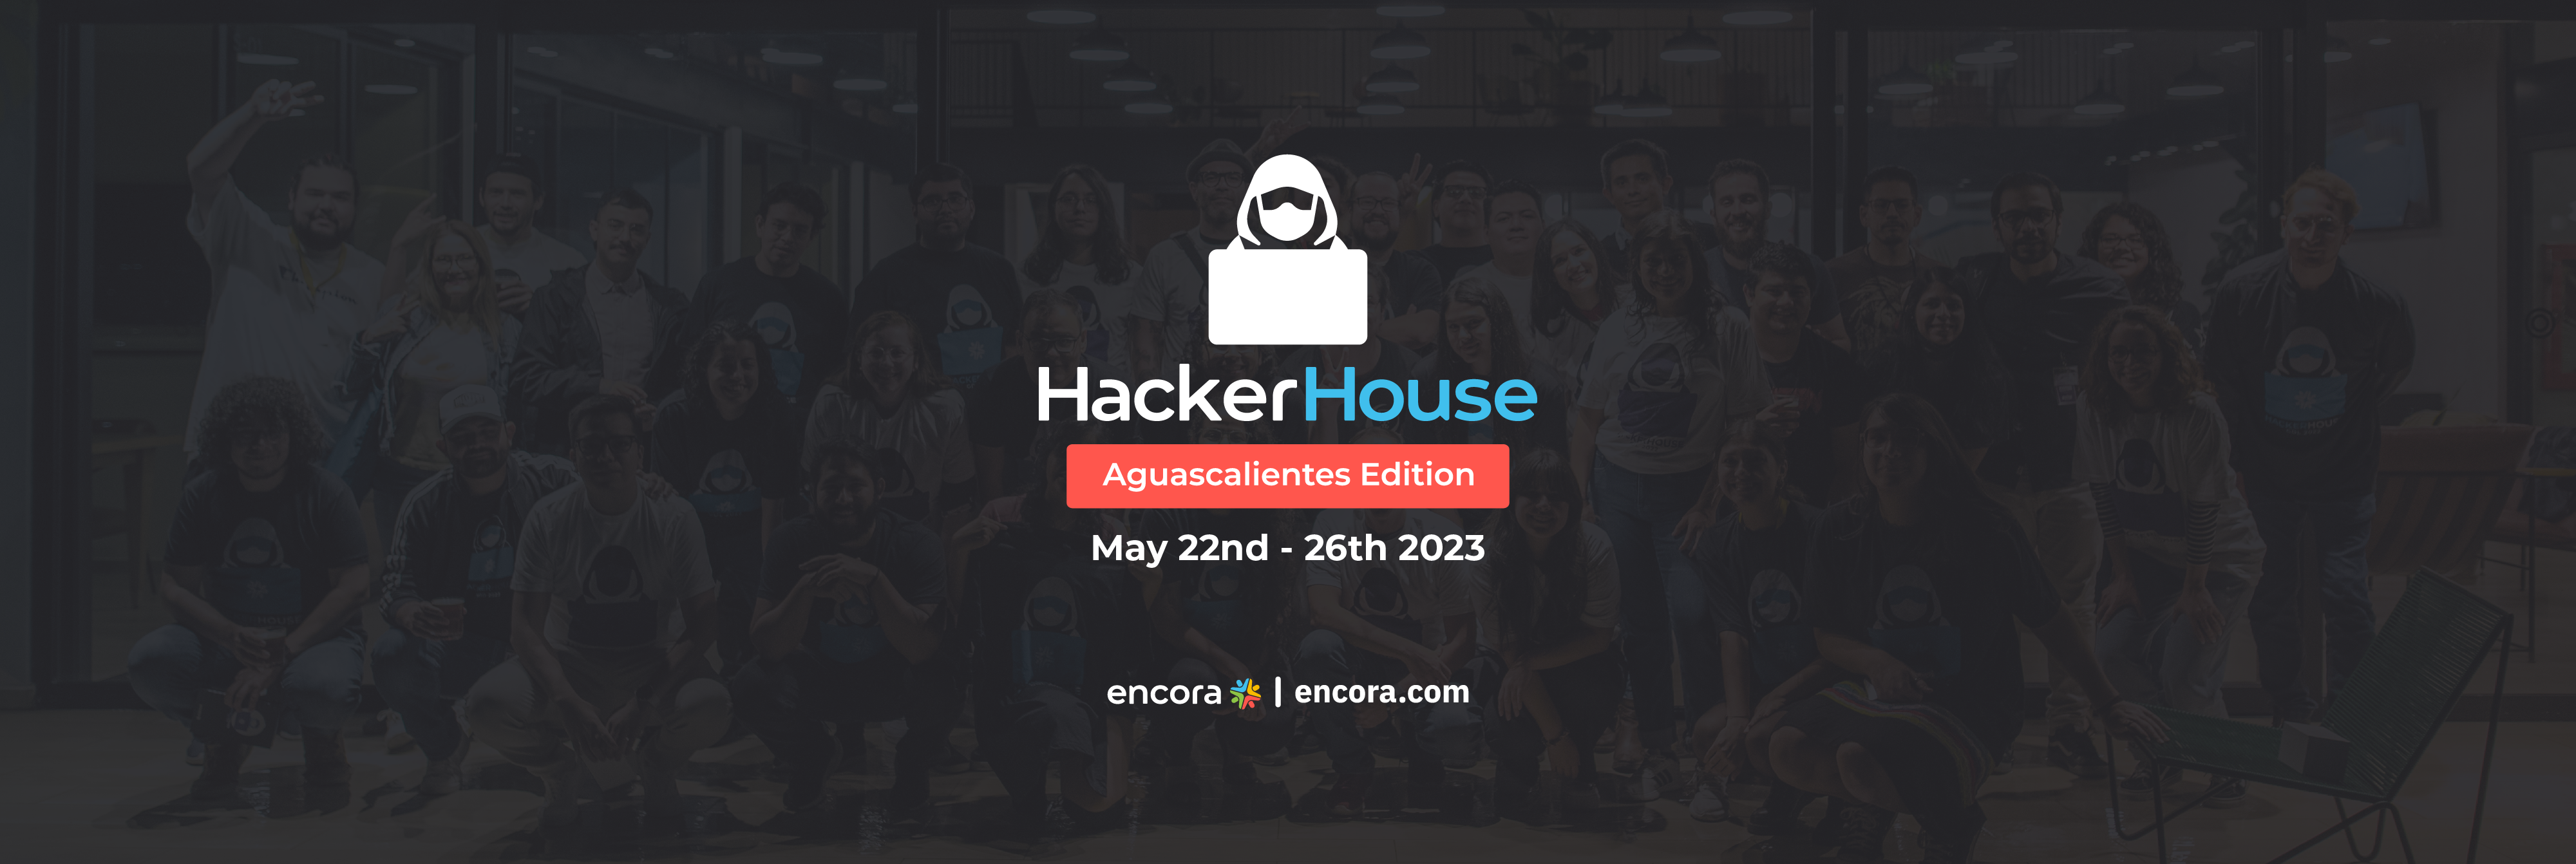 Encora Hacker House Aguascalientes 2023